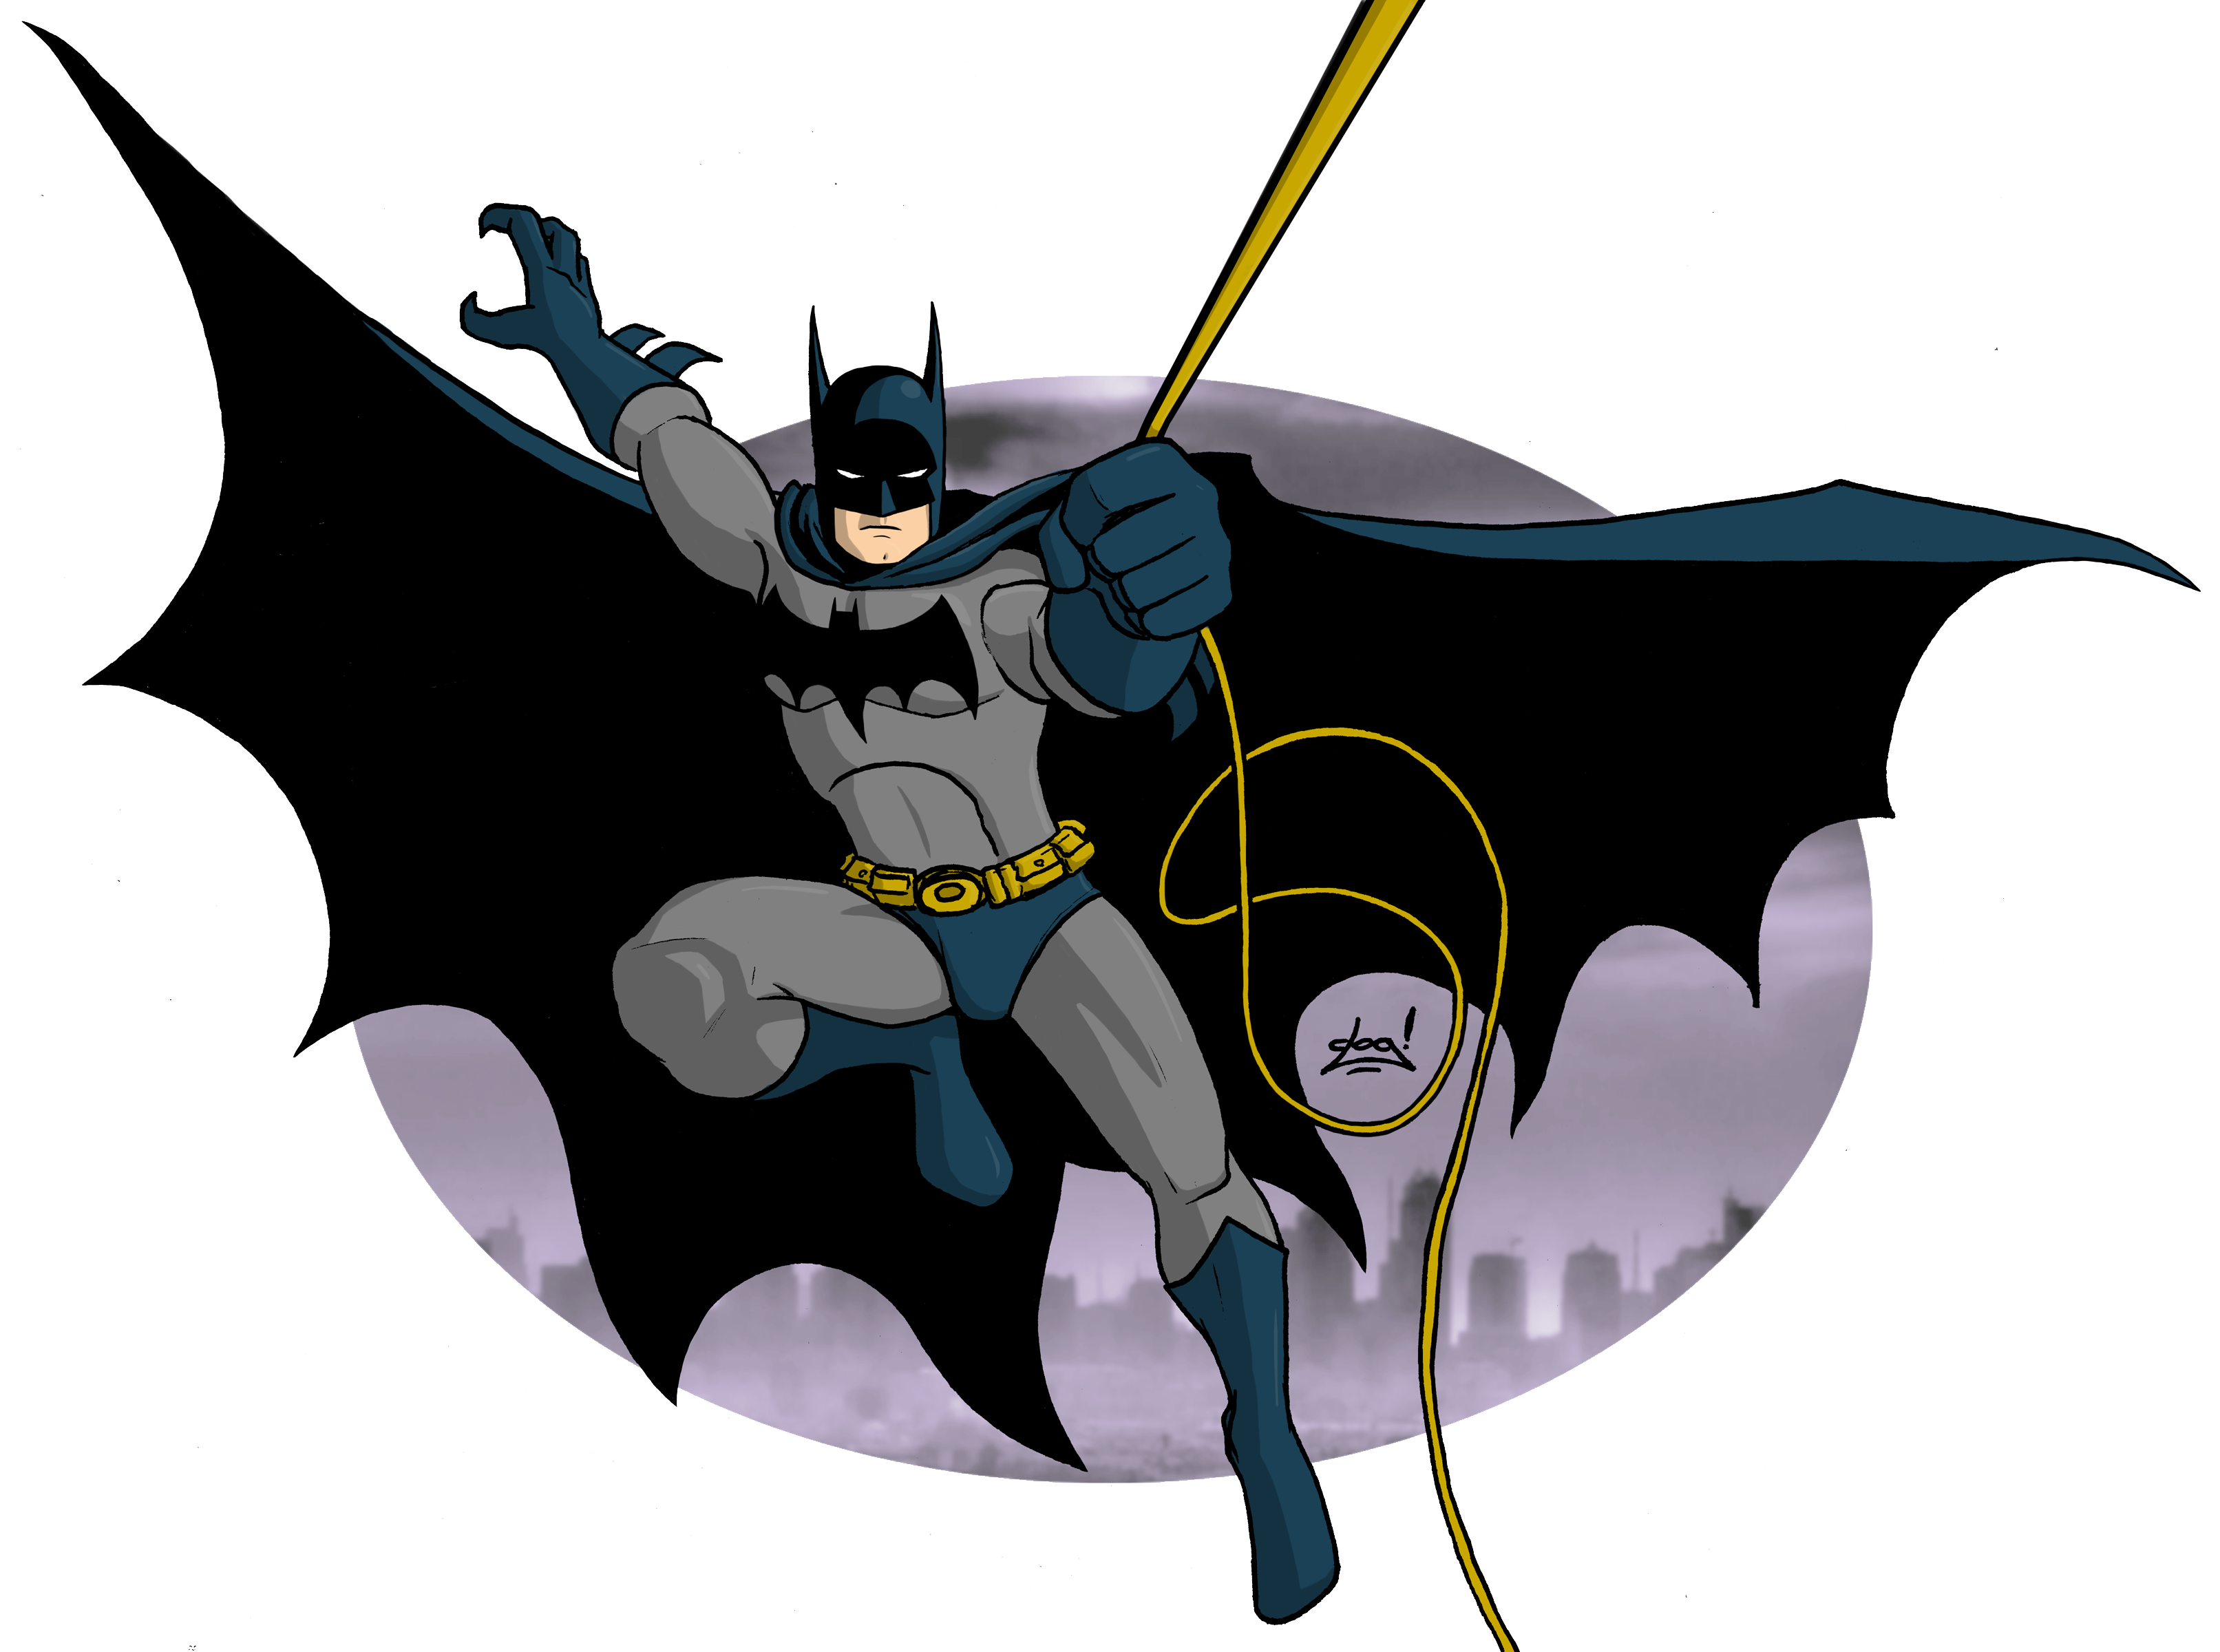 Batman PNG Transparent Image